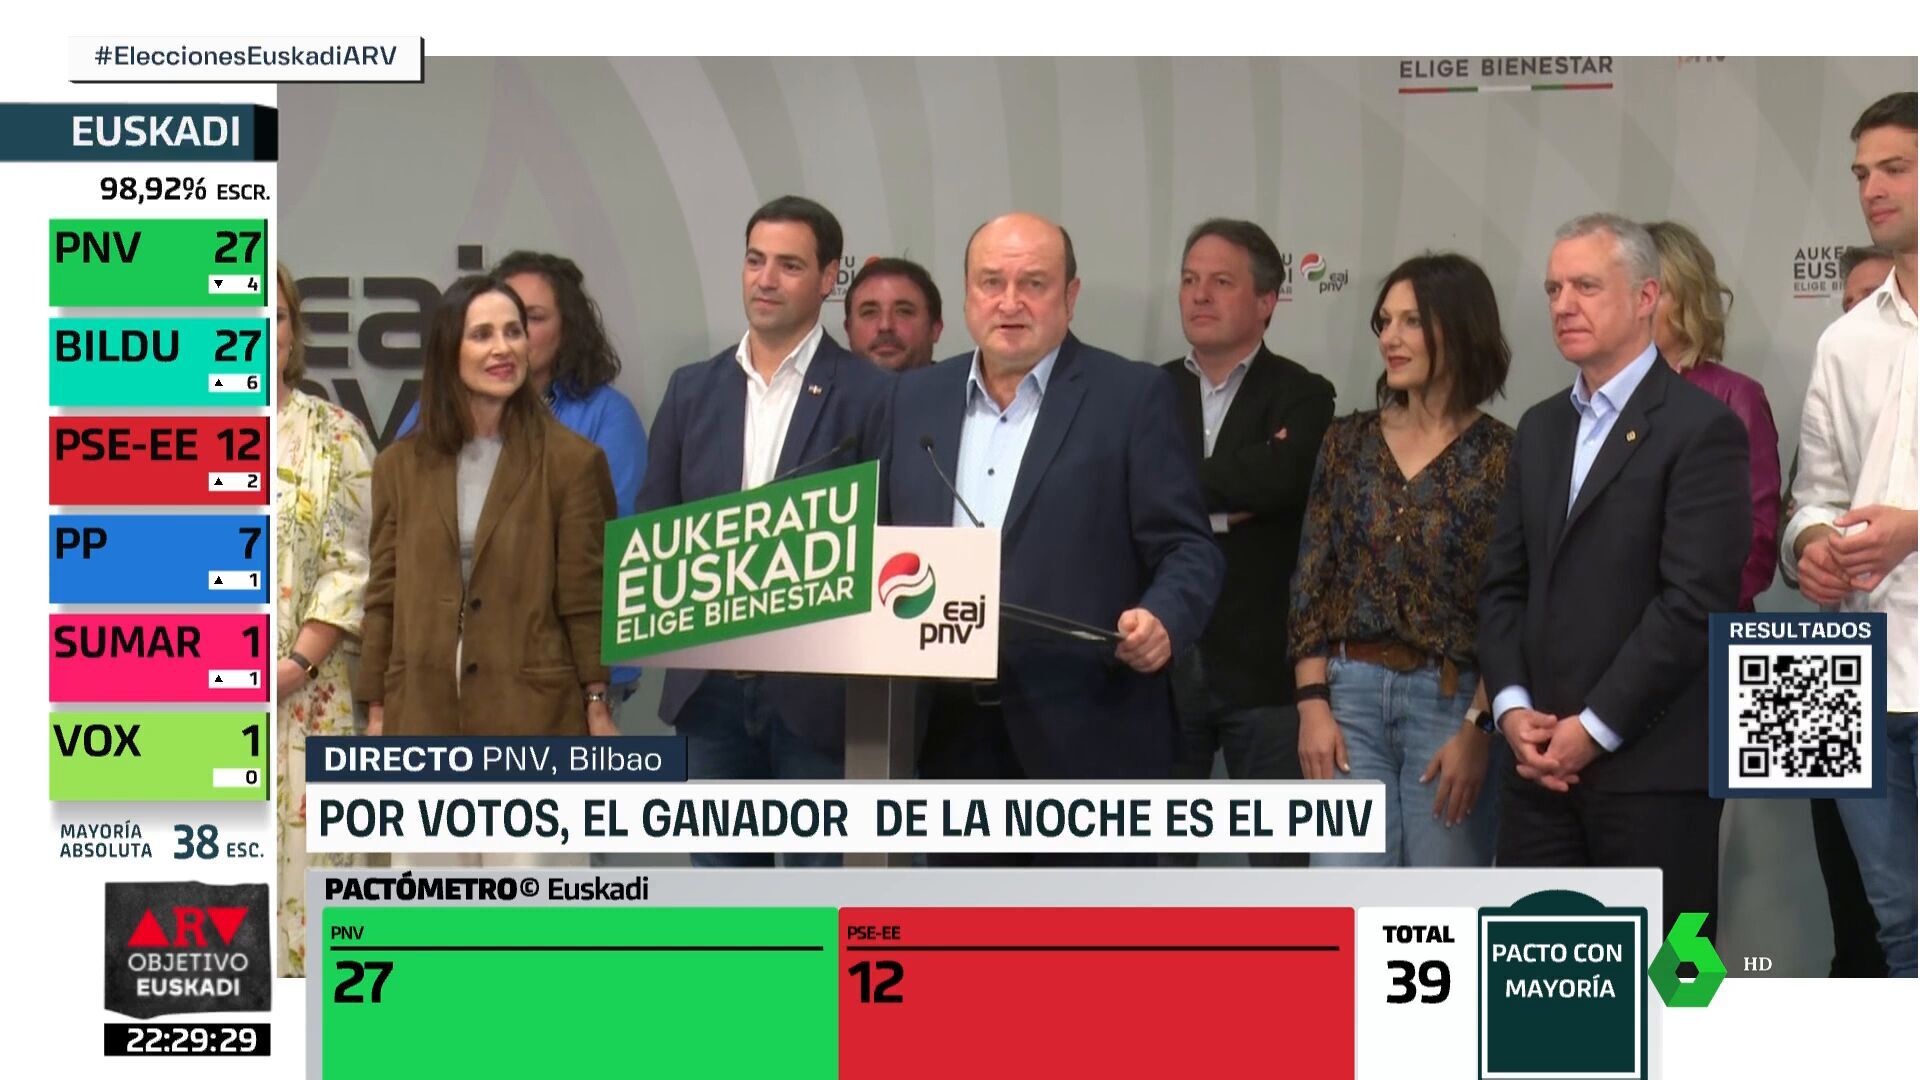 Abril 2024 ARV Objetivo Euskadi: los resultados